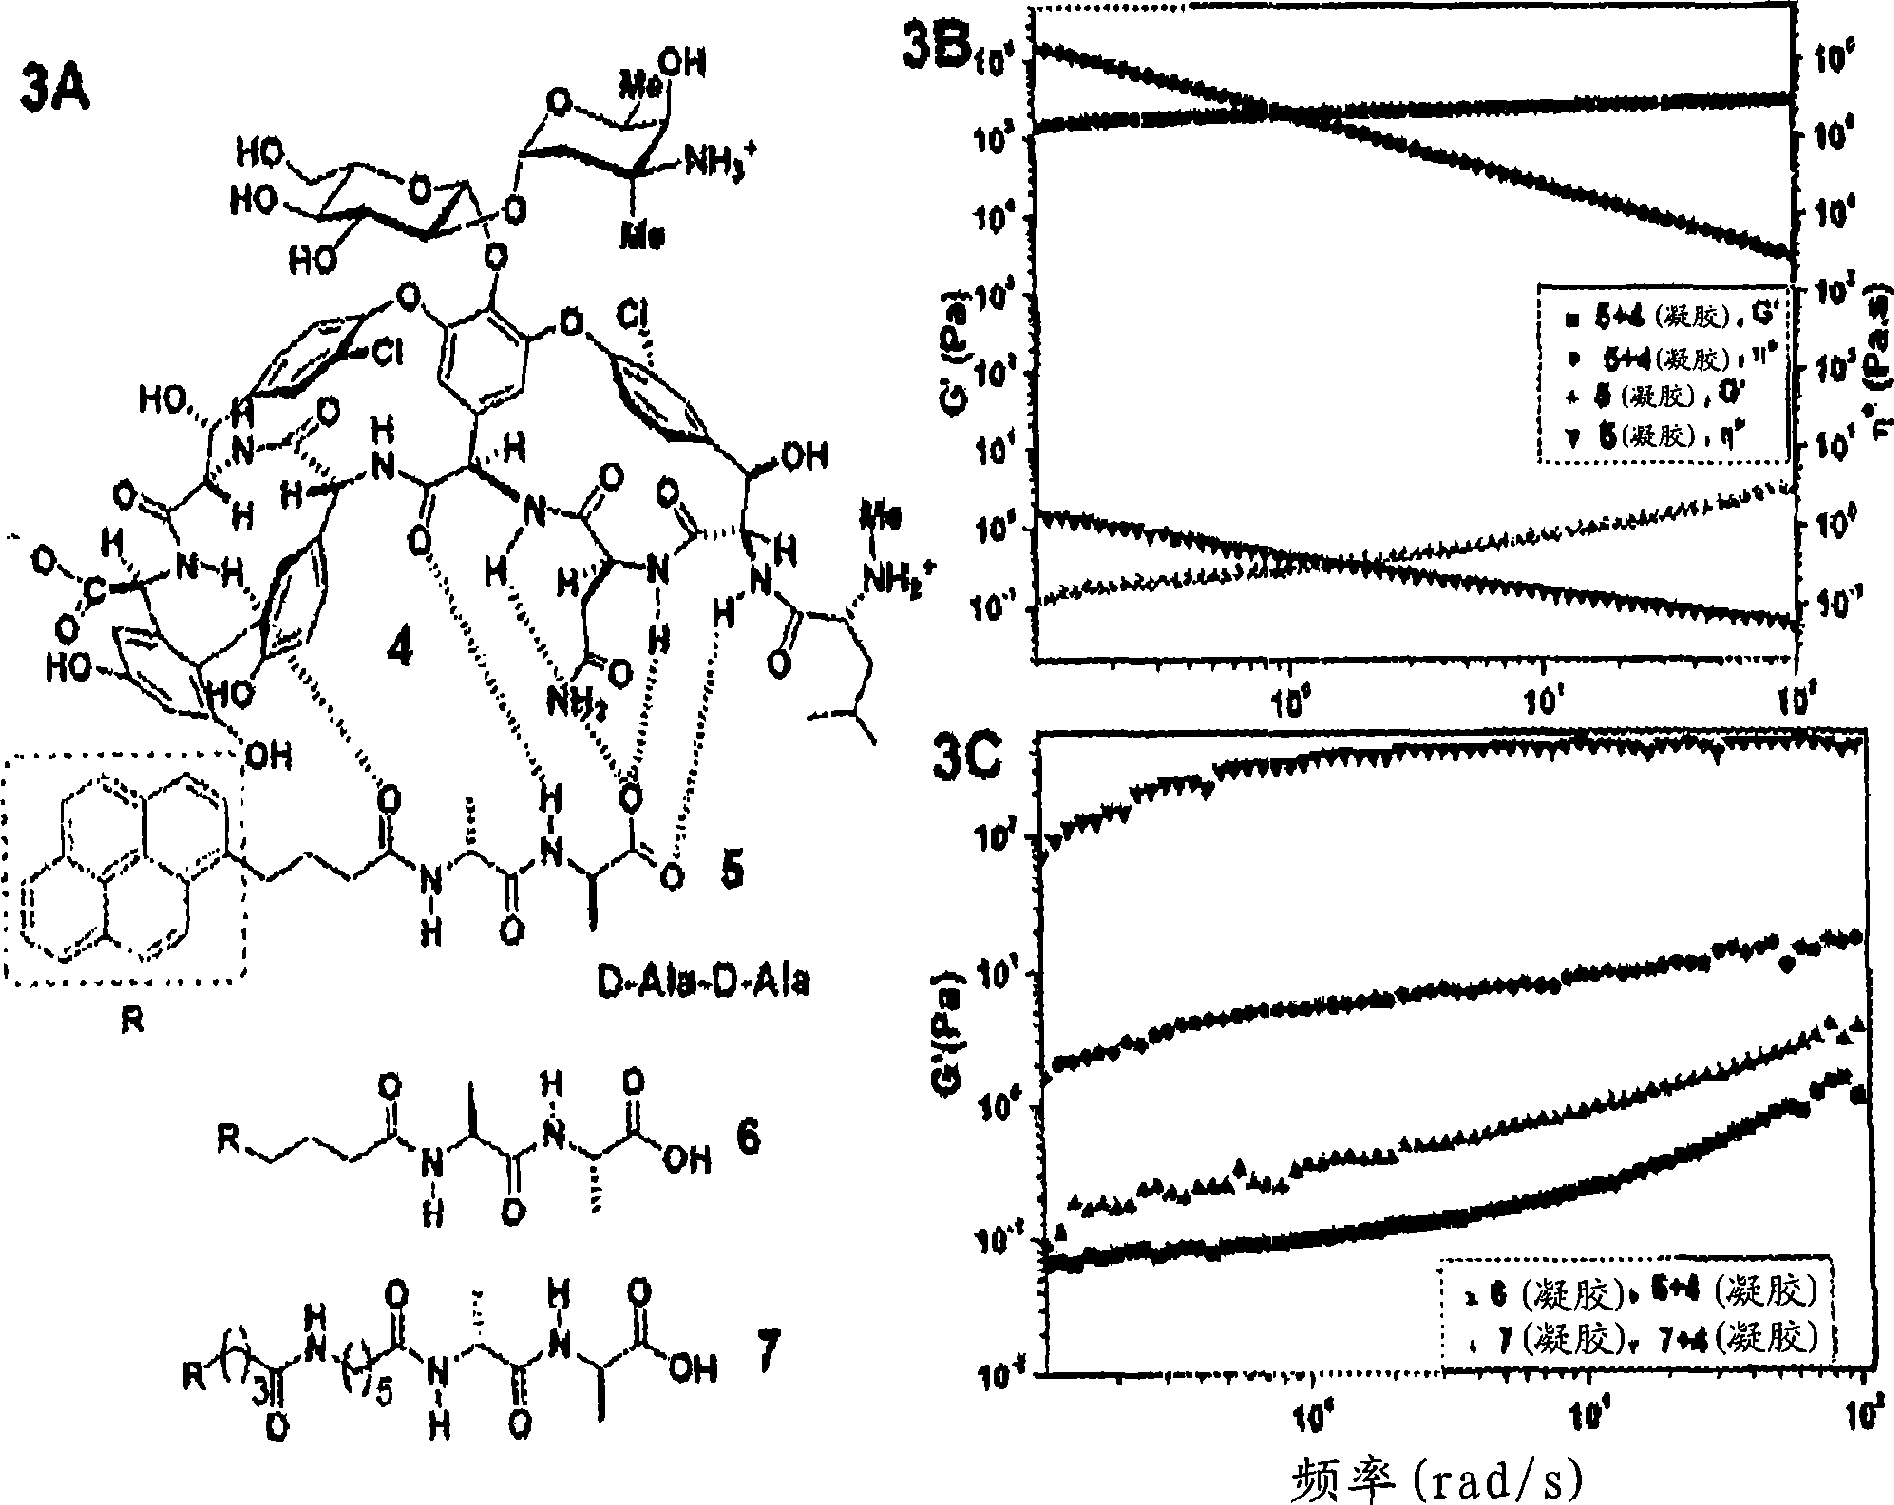 Multifunctional supramolecular hydrogels as biomaterials